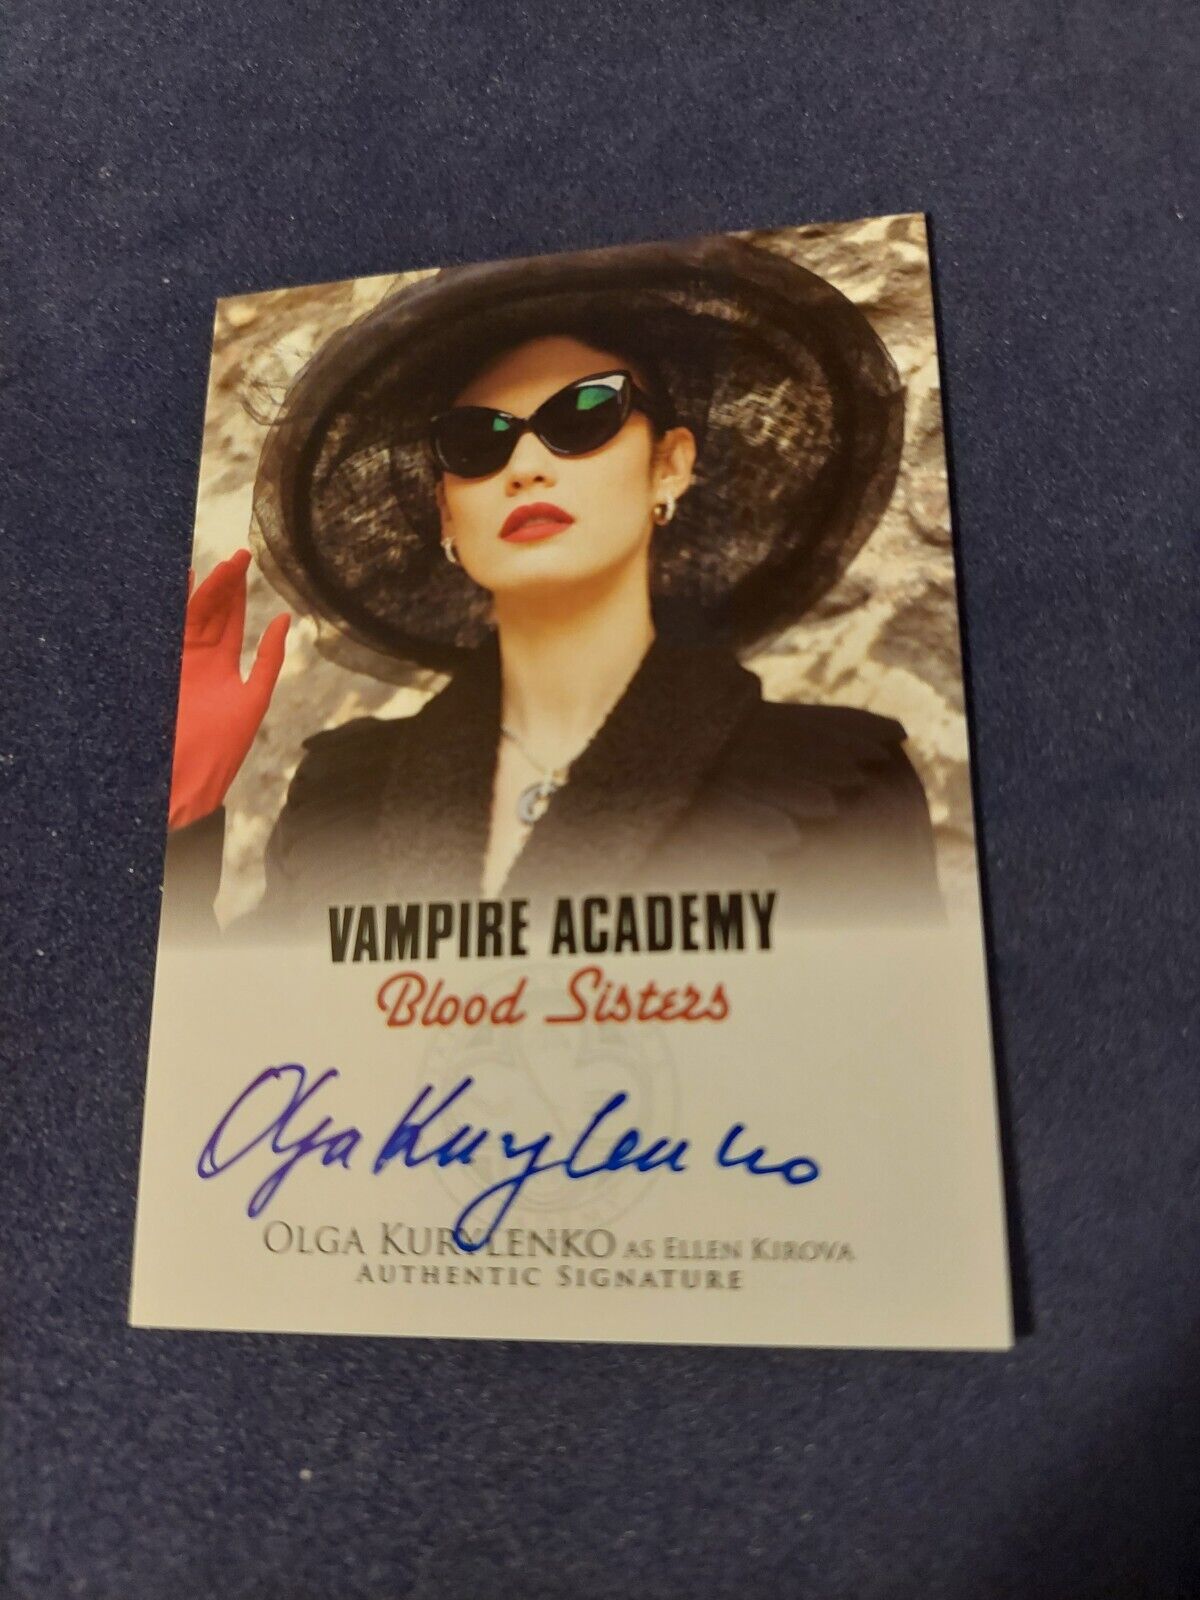 2014 Leaf Vampire Academy Blood Sisters Auto #A-OK1 Olga Kurylenko as Ellen Kiro